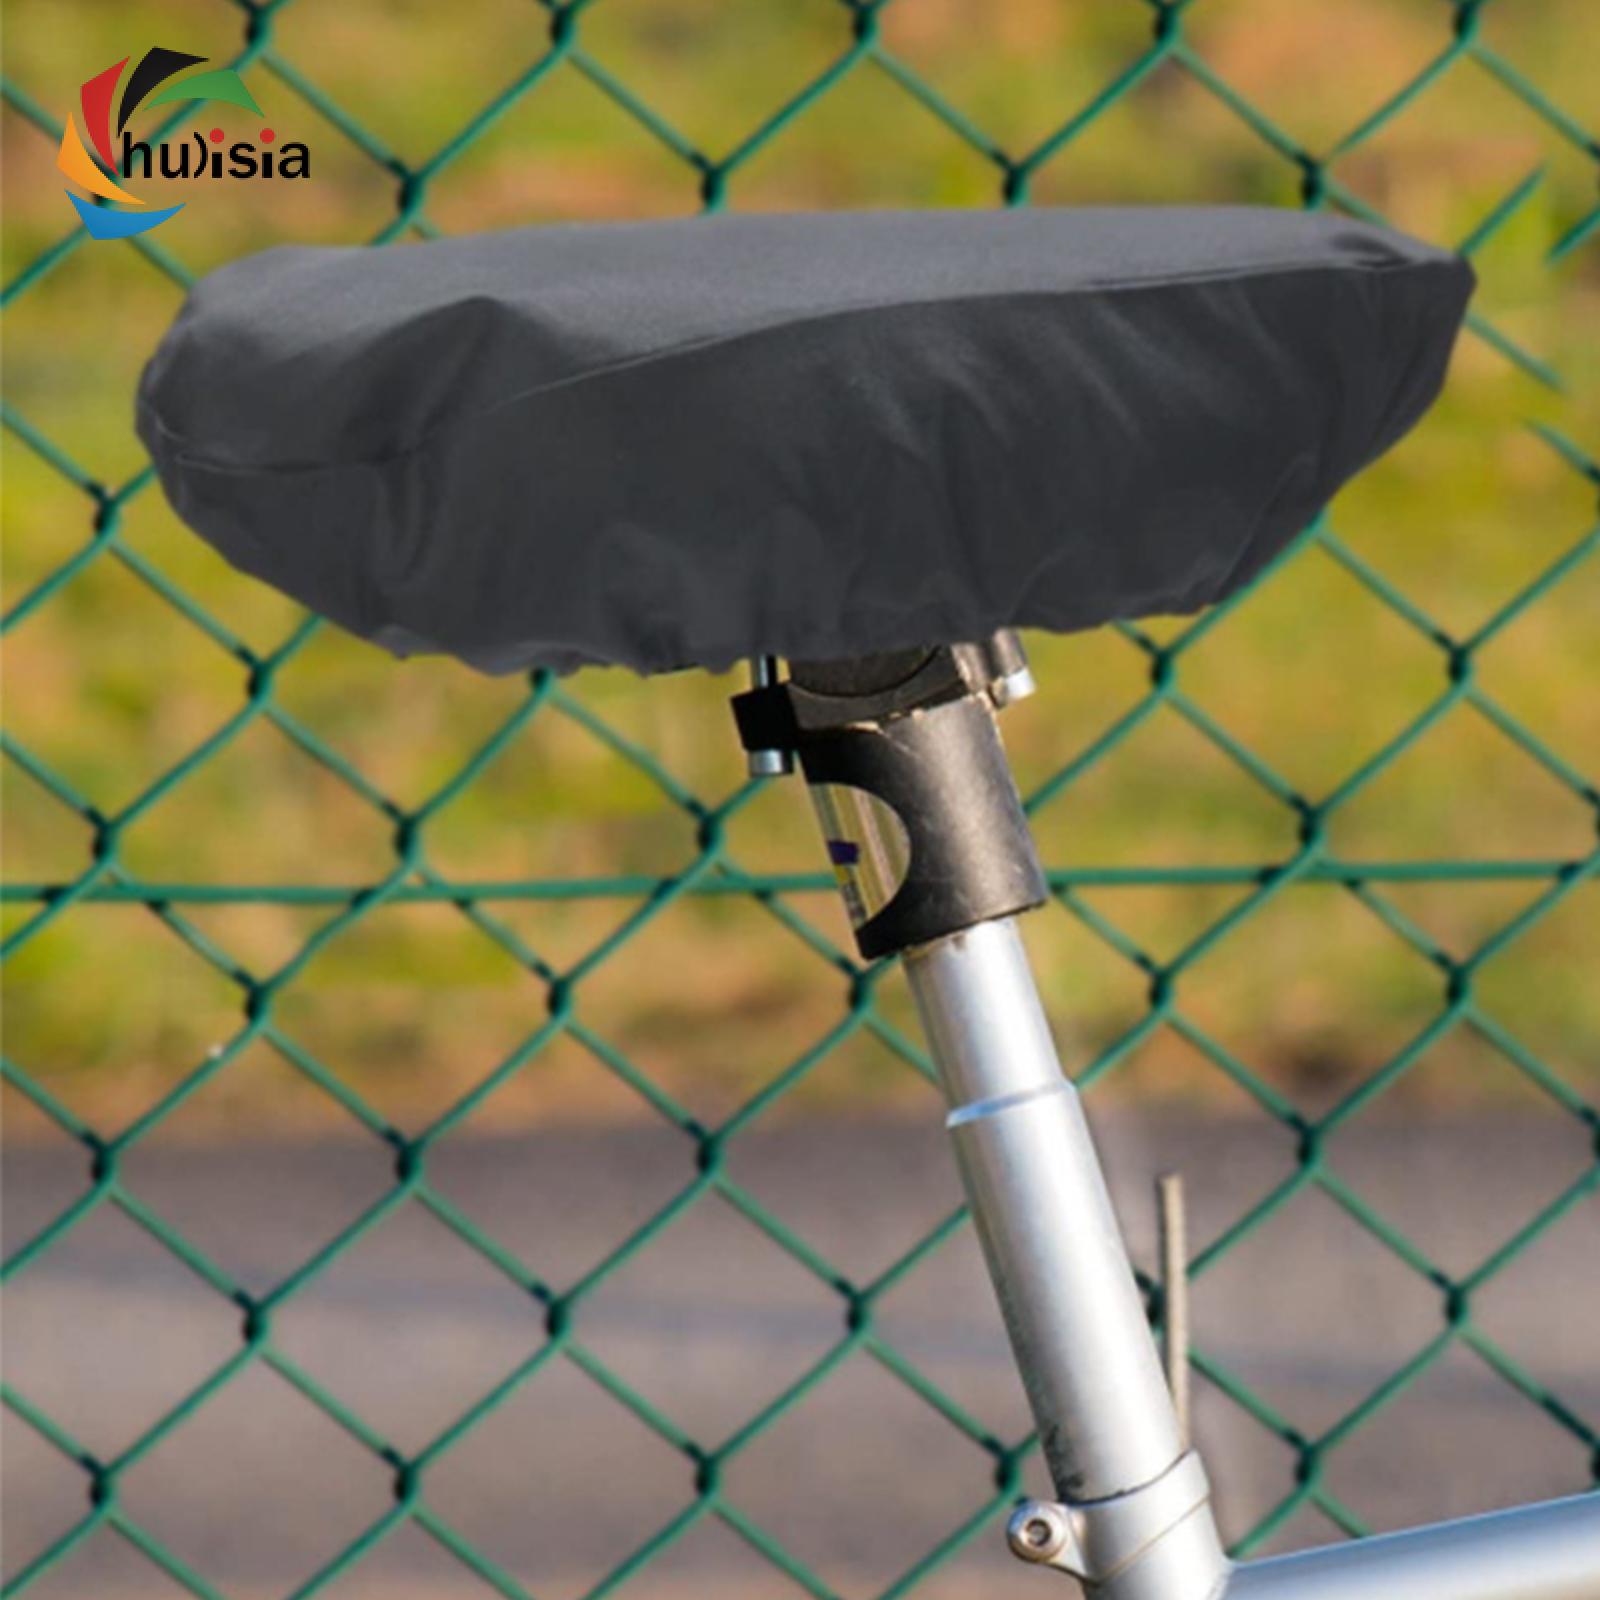 chulisia Bike Seat Cover Bike Seat Protector with Drawstring Oxford Cloth